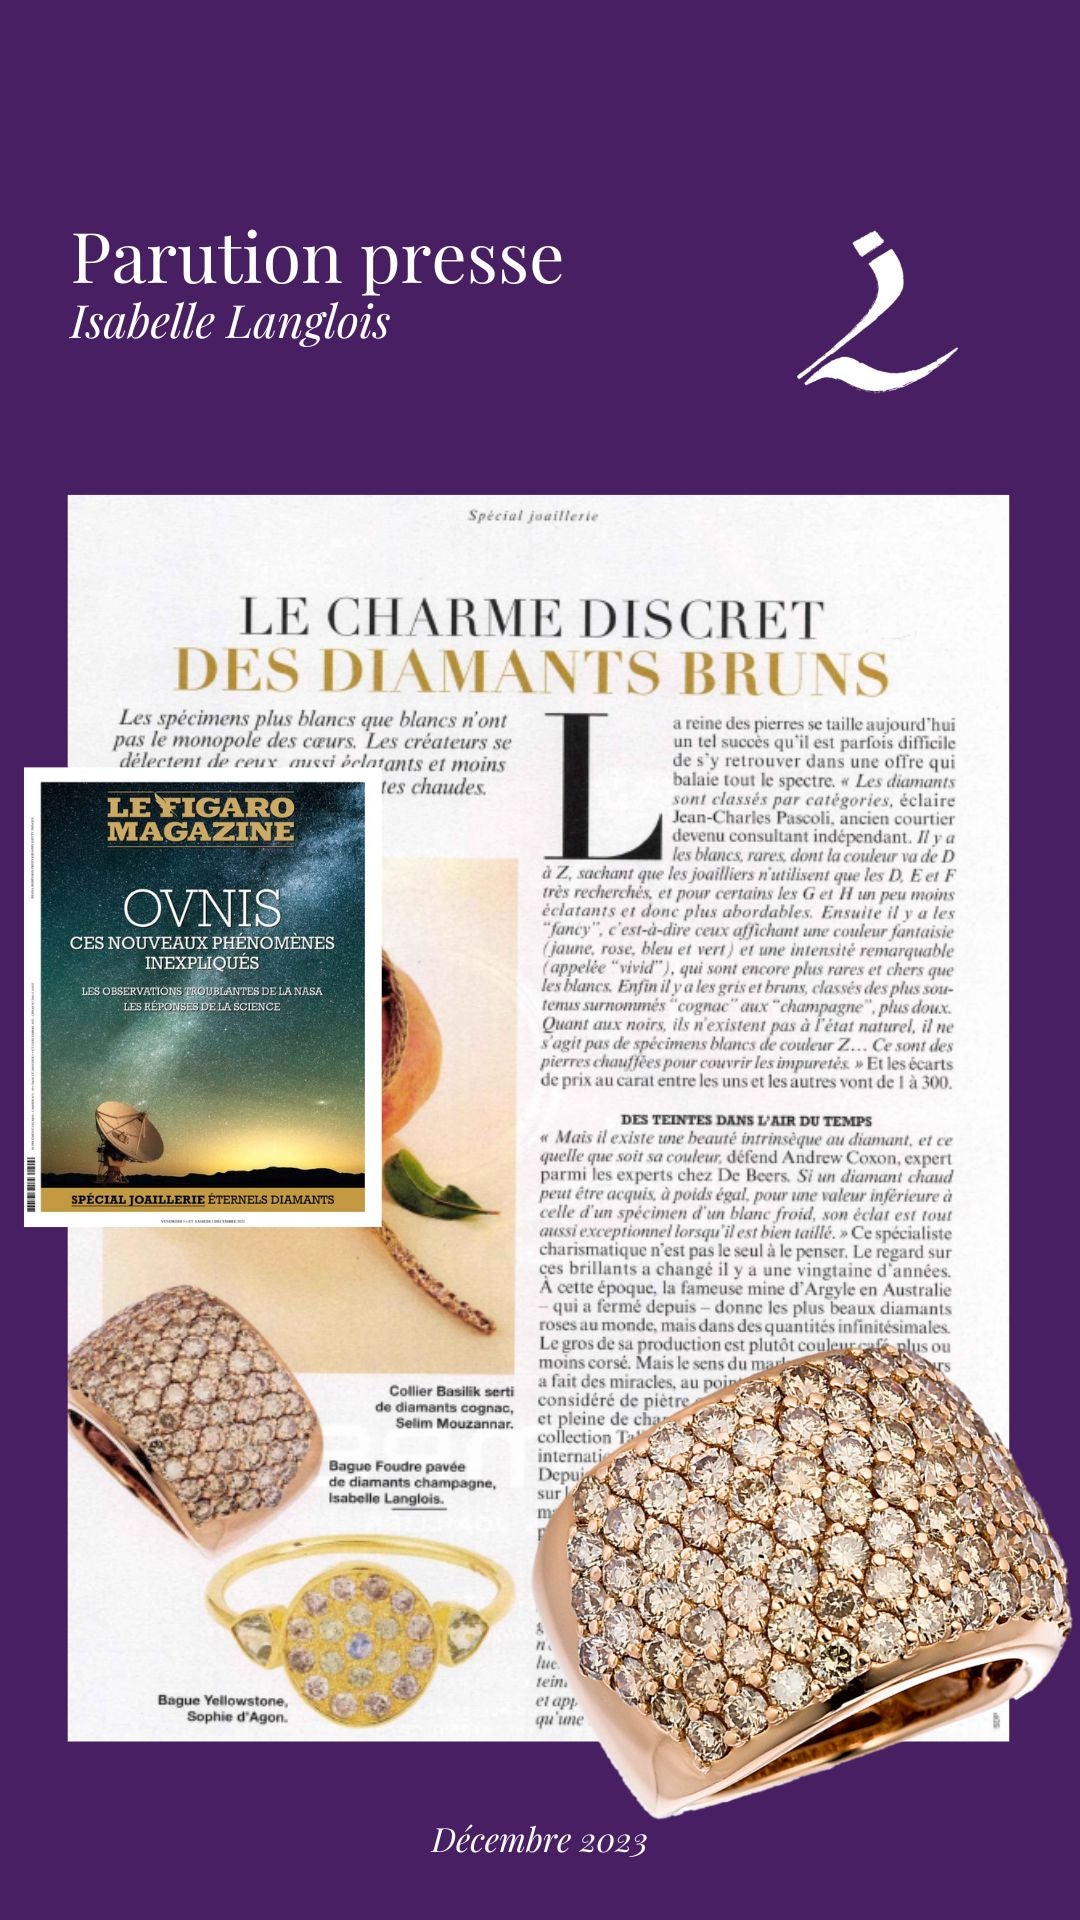 Le Figaro magazine